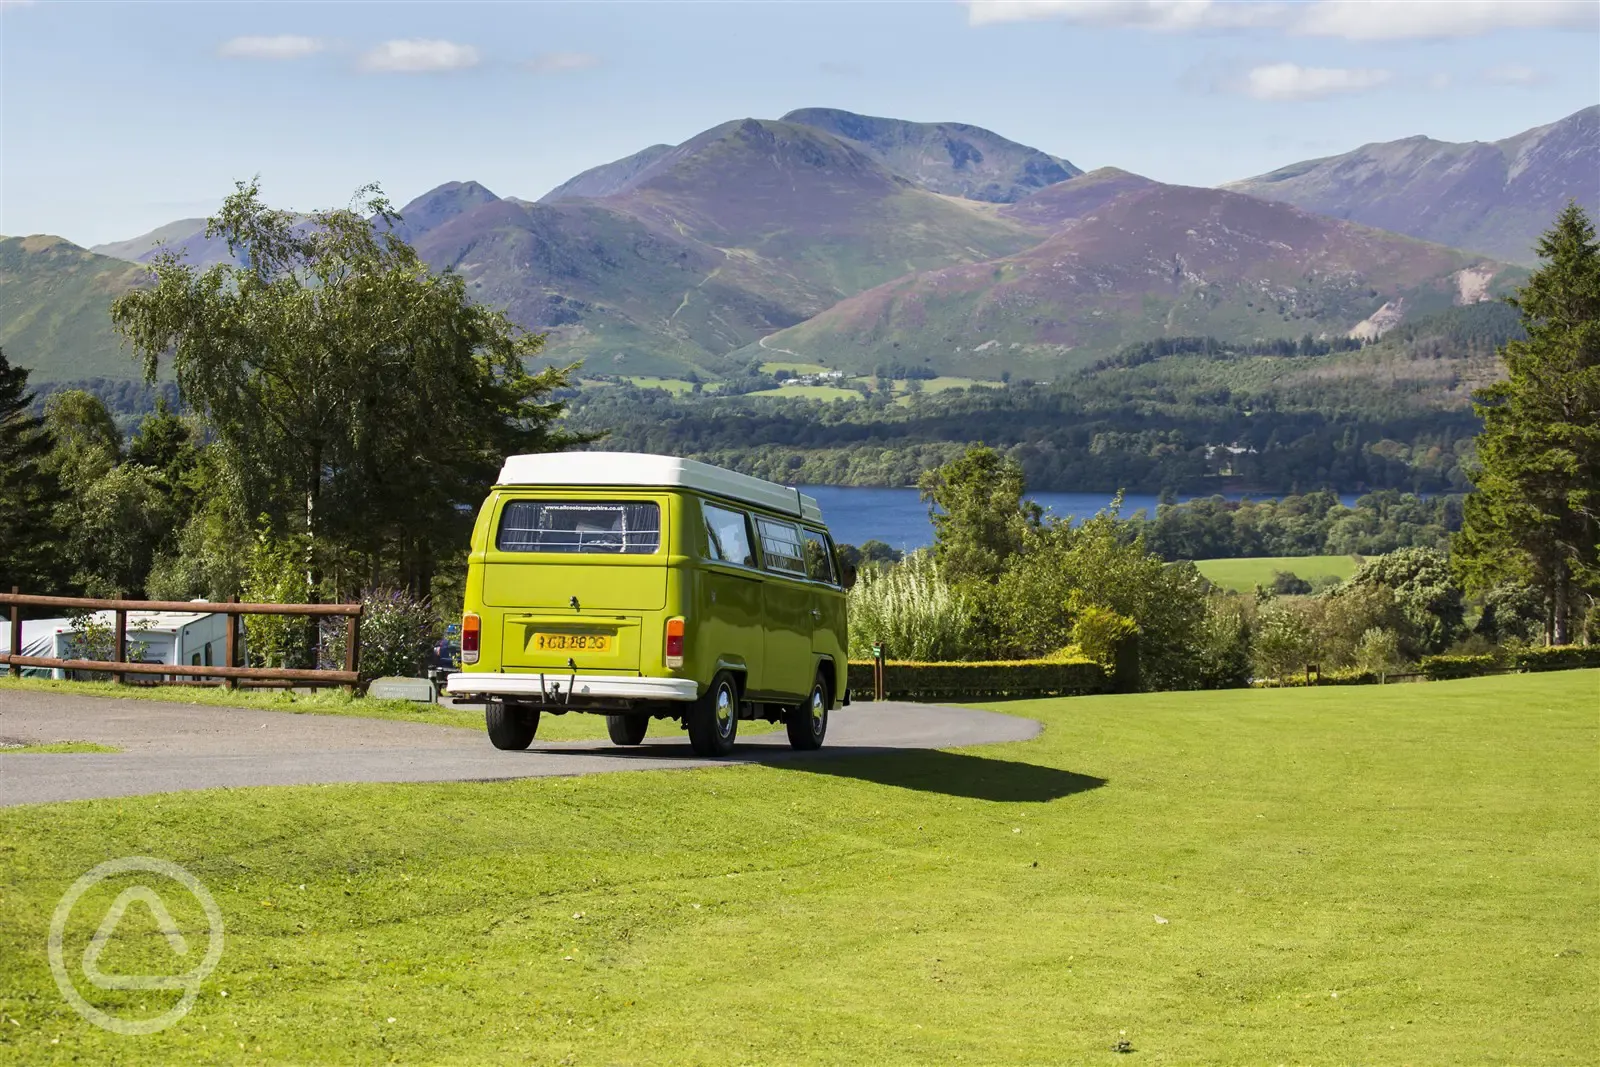 VW Camper arrives on holiday at Castlerigg Hall Caravan and Camping Park